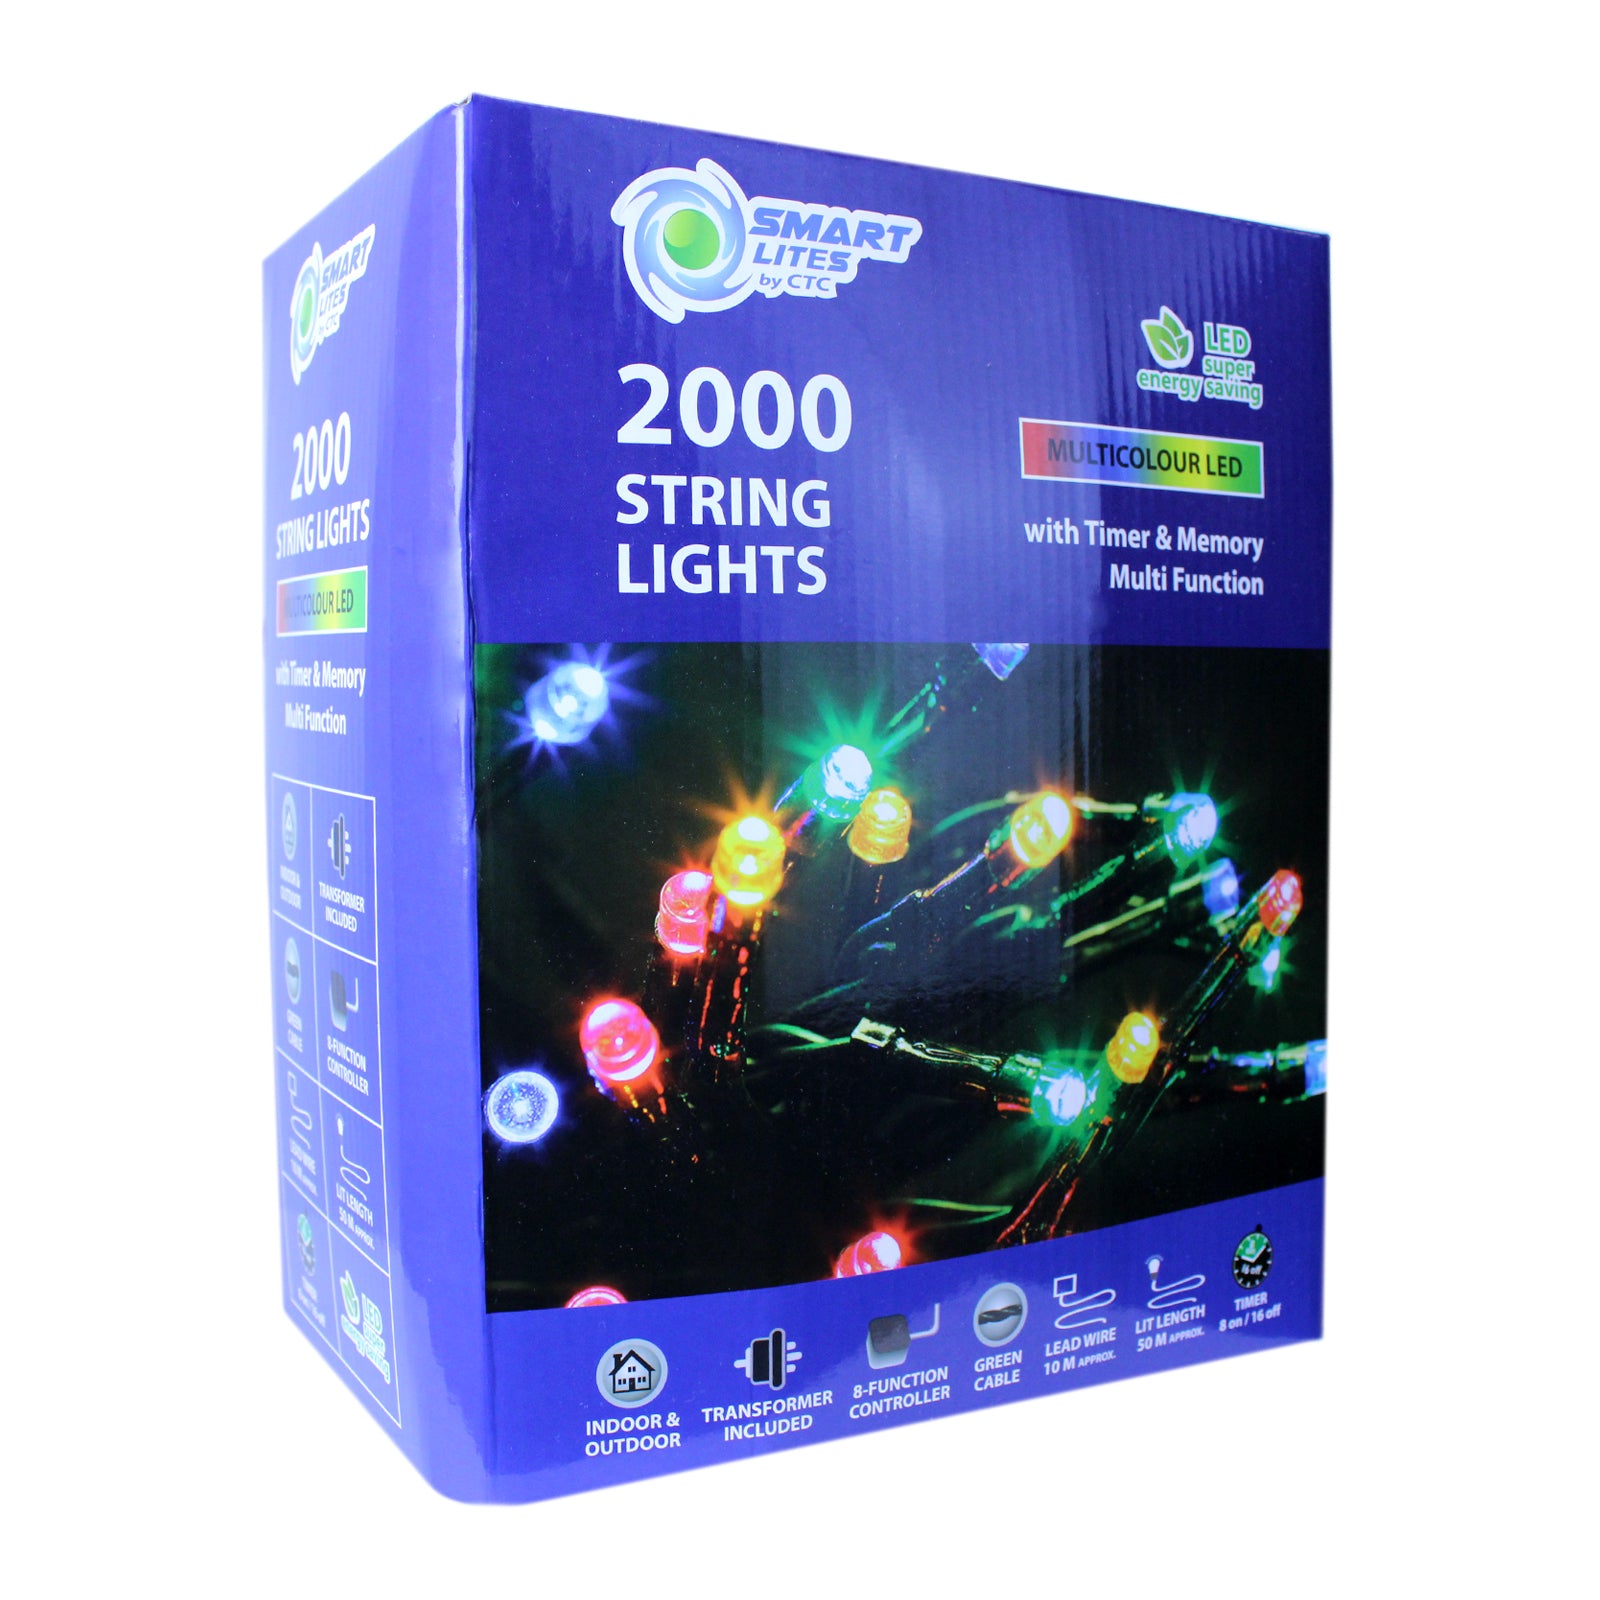 AMOS 500 or 2000 LED String Lights